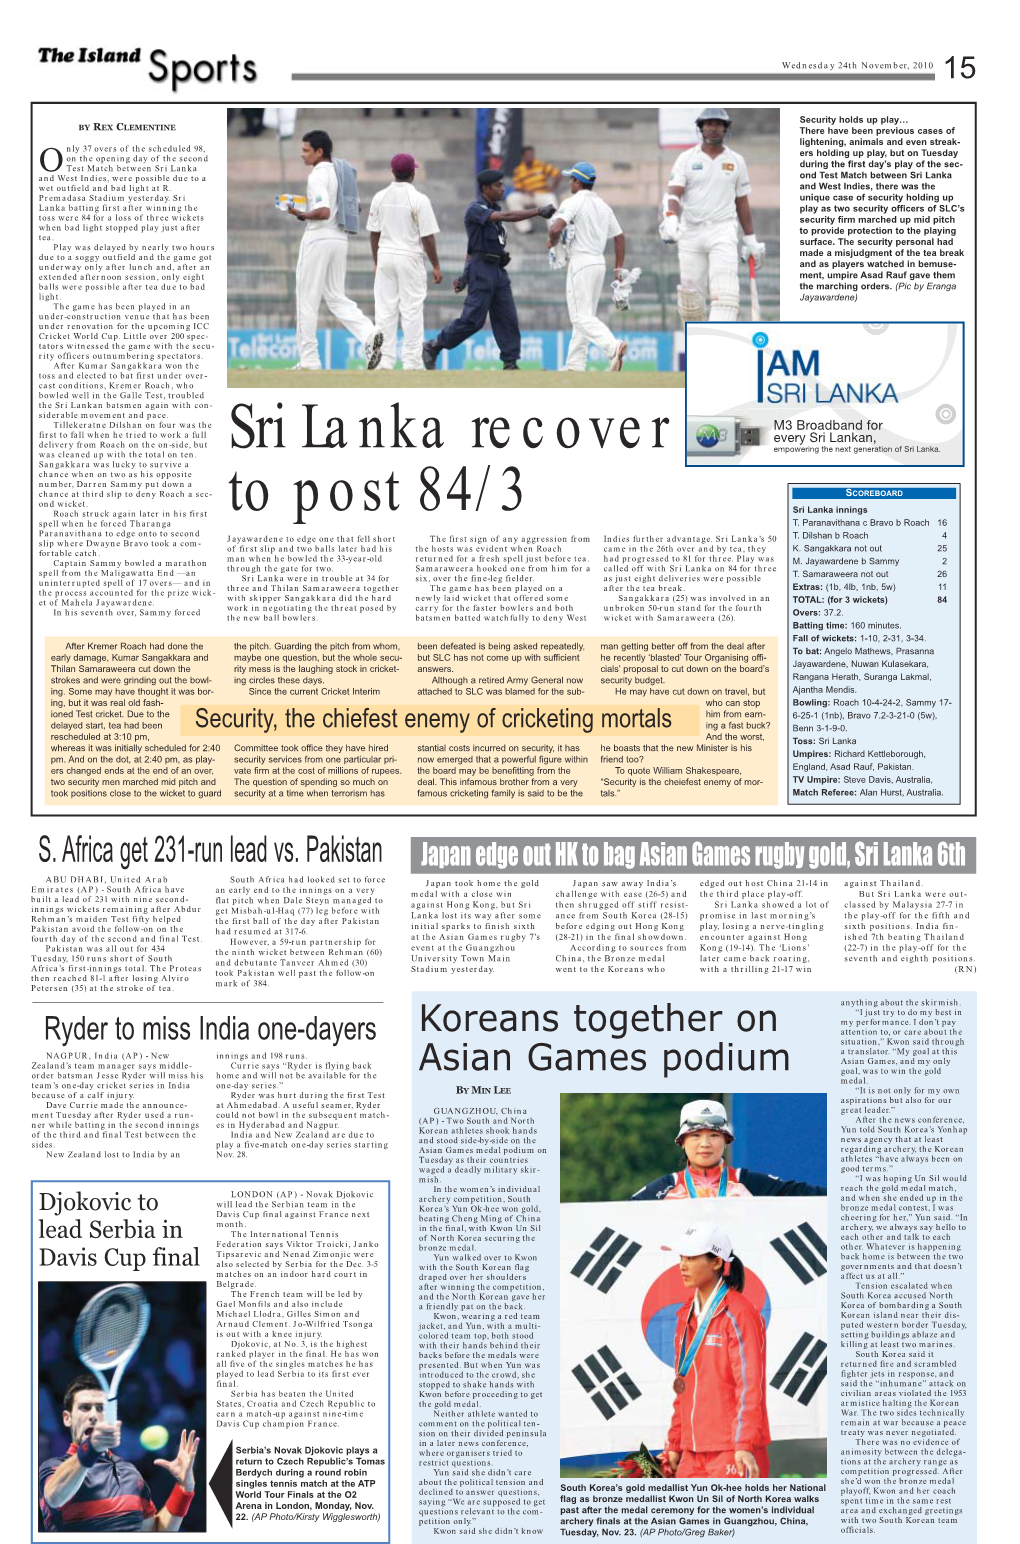 Sri Lanka Recover to Post 84/3